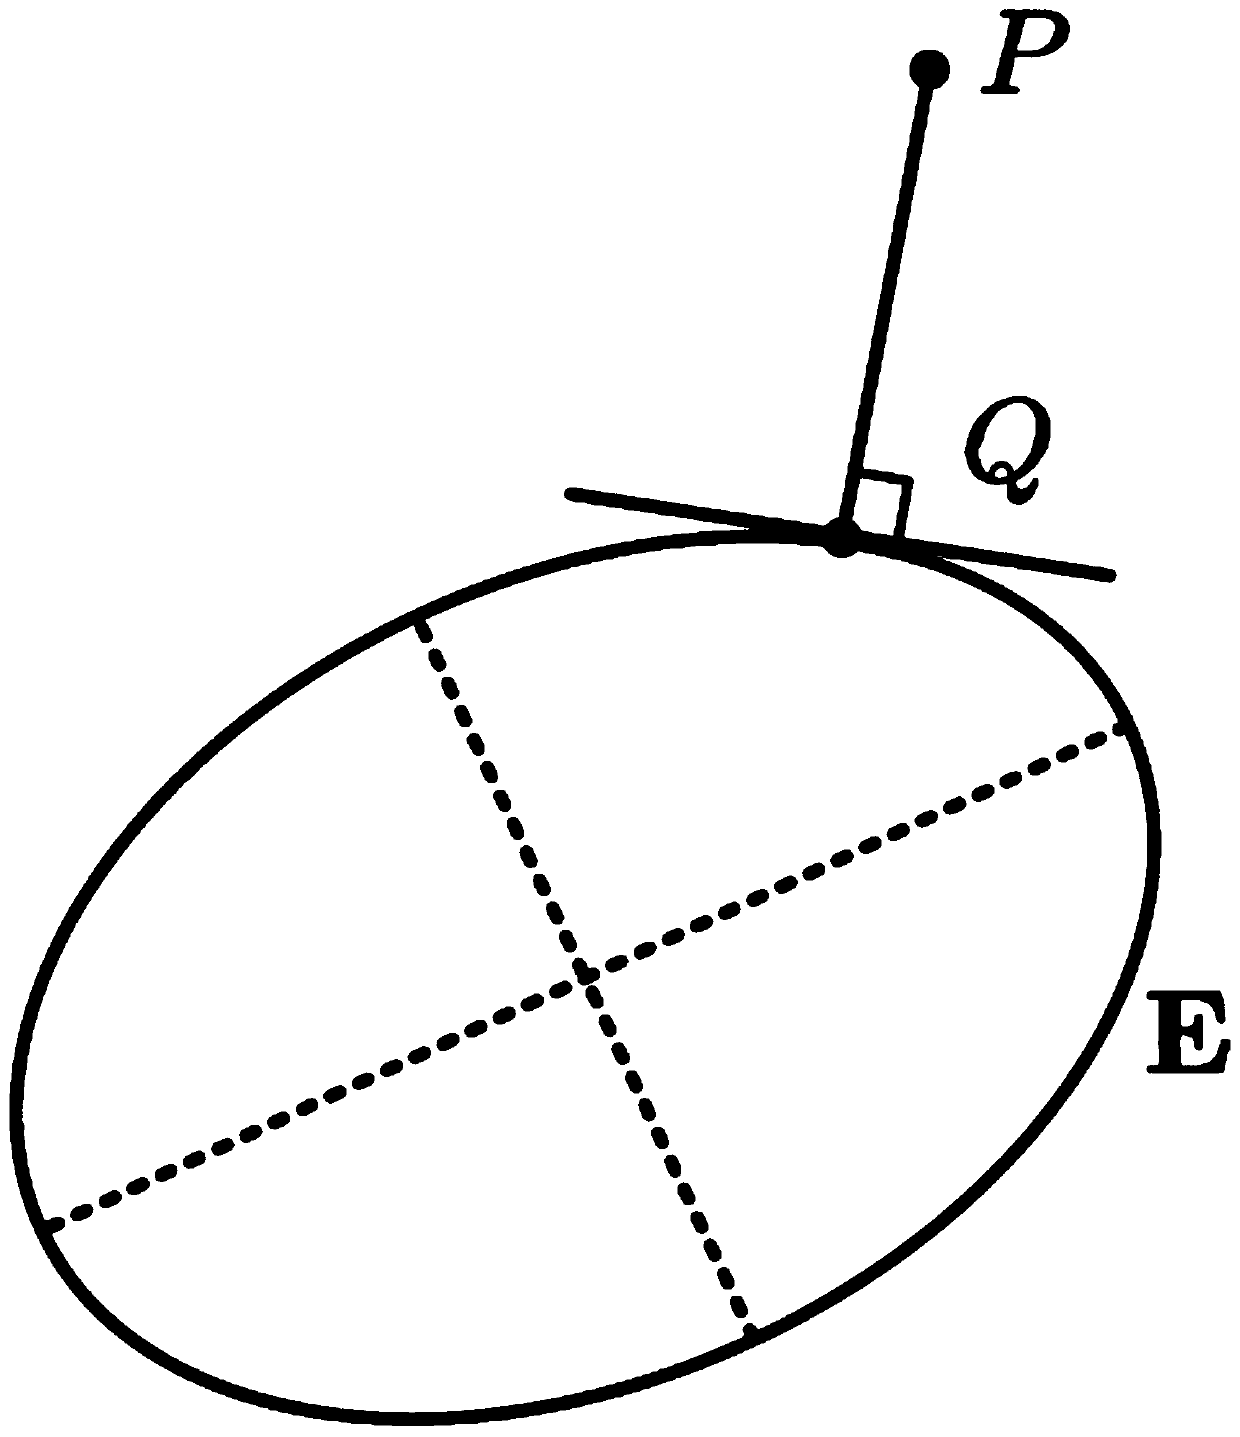 Ellipse detection method based on chord tangent distance